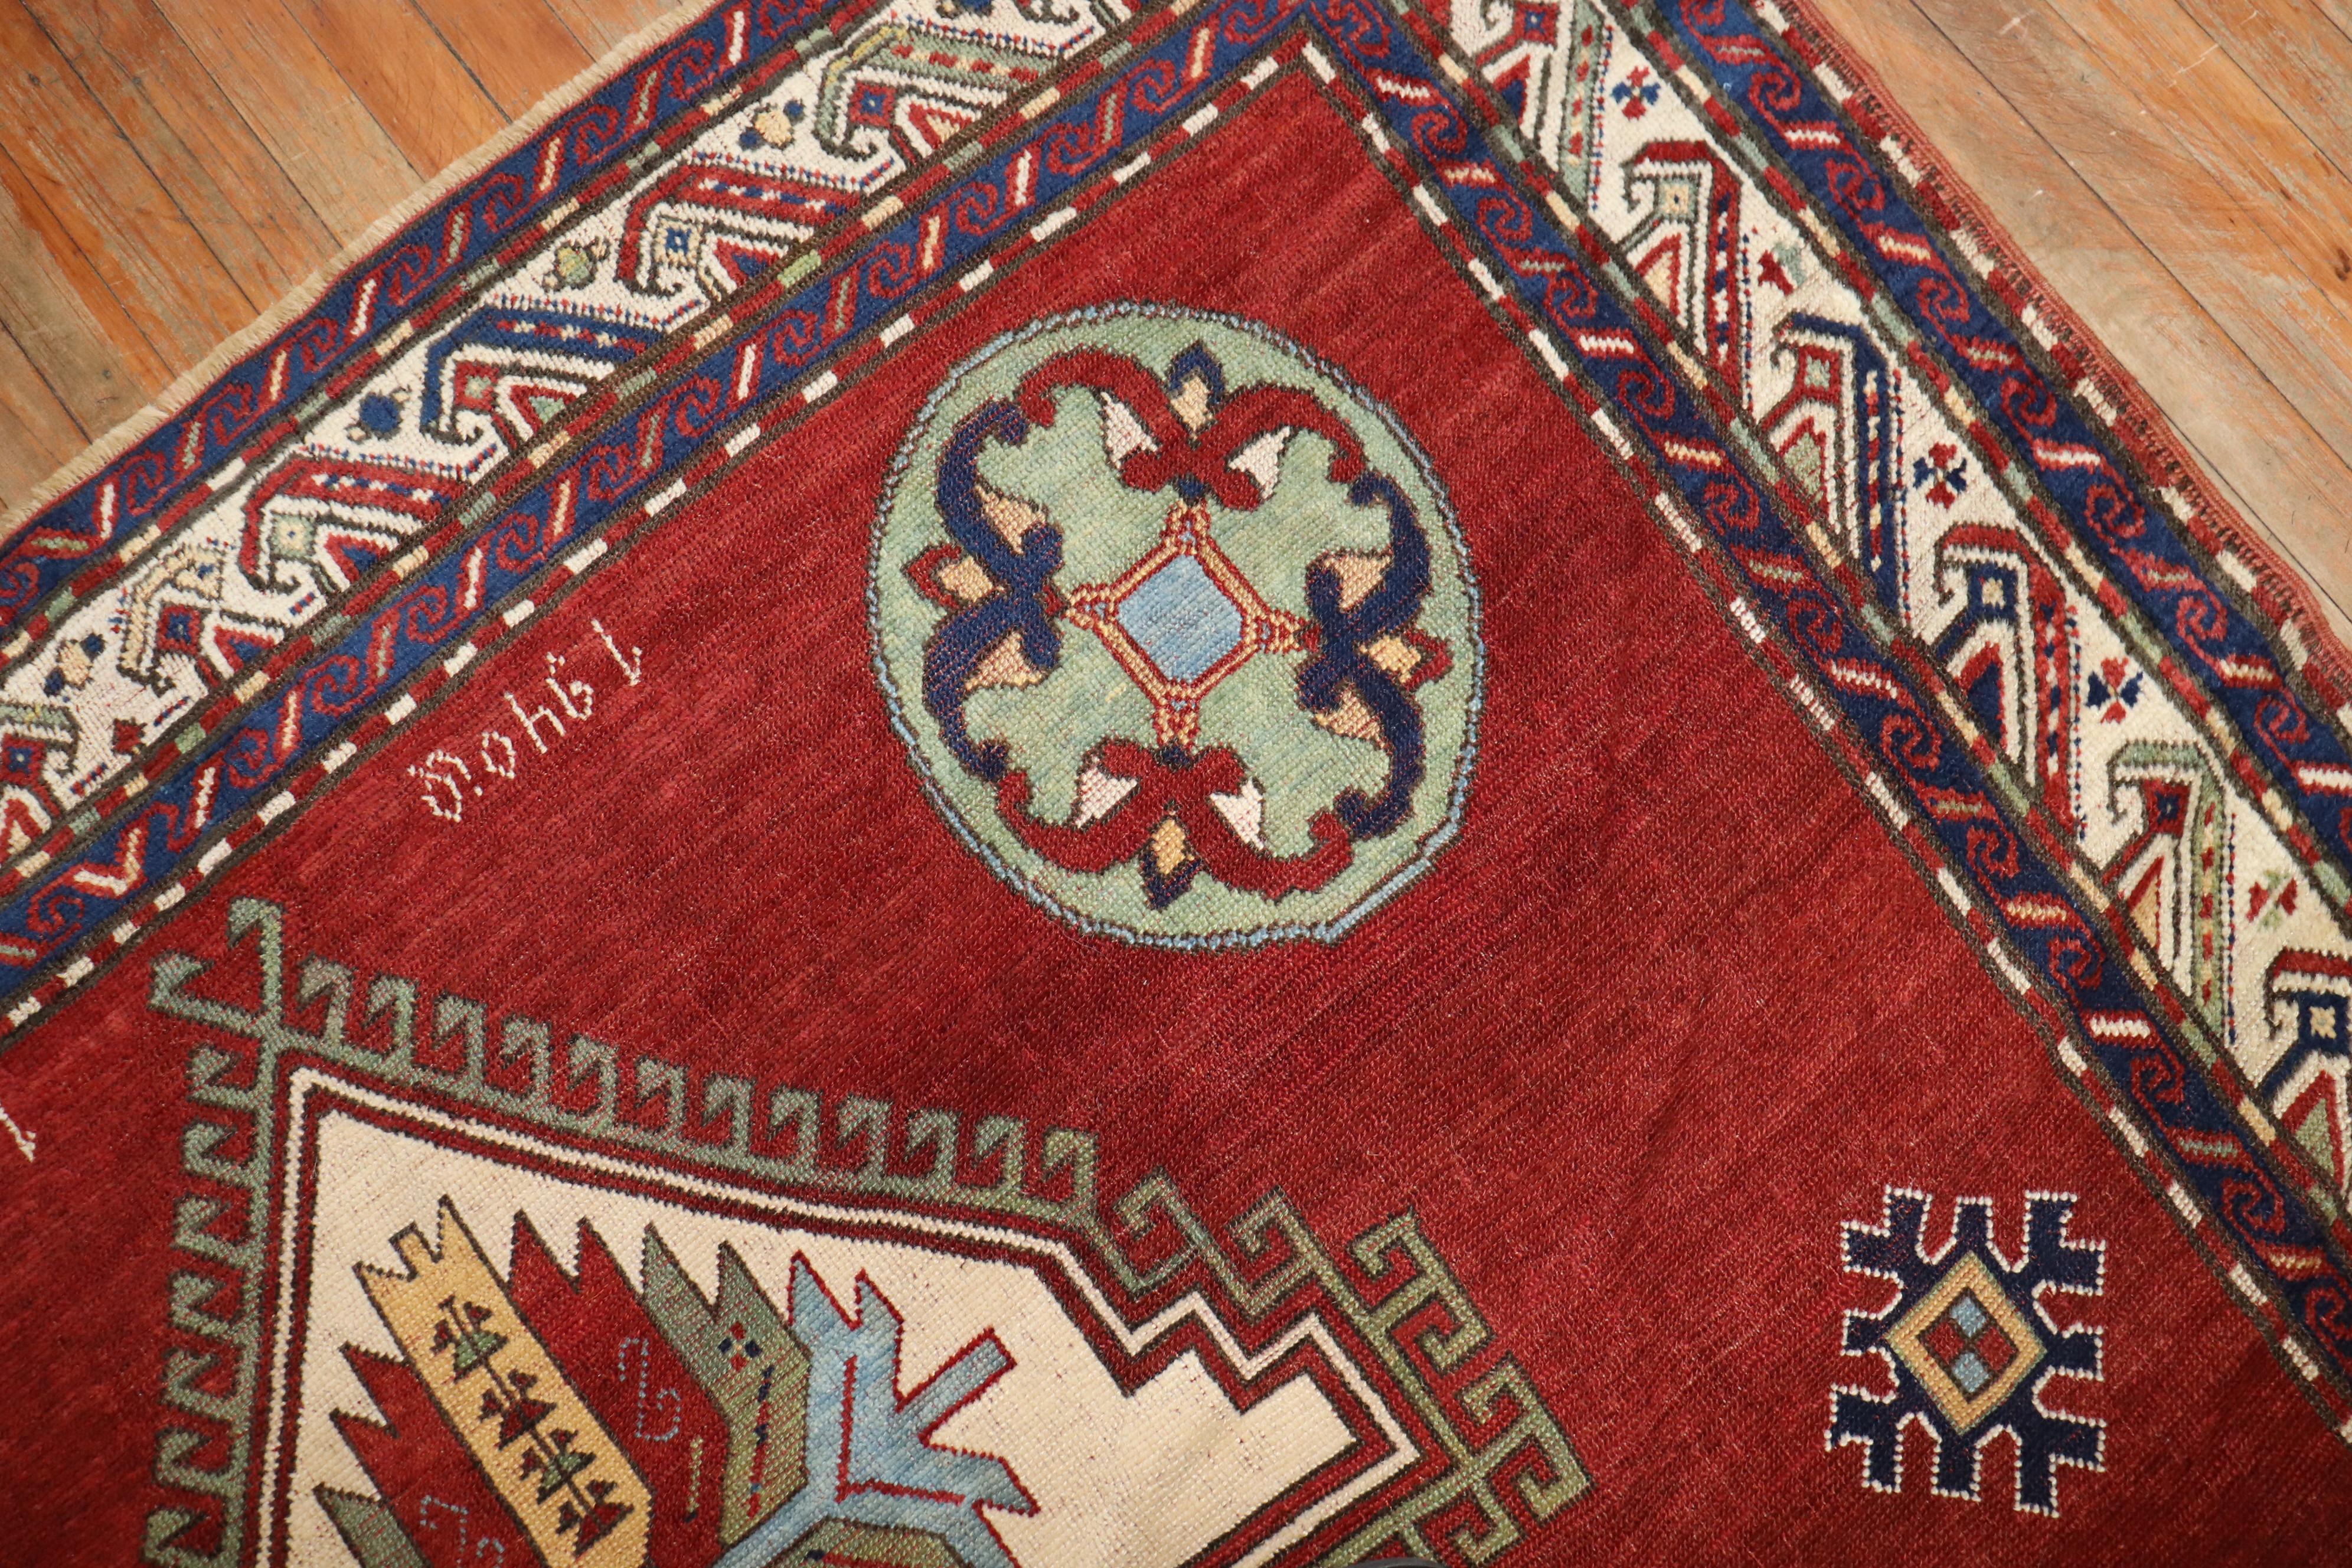 Madder Red Armenianischer antiker Teppich, datiert 1940 (Handgewebt) im Angebot